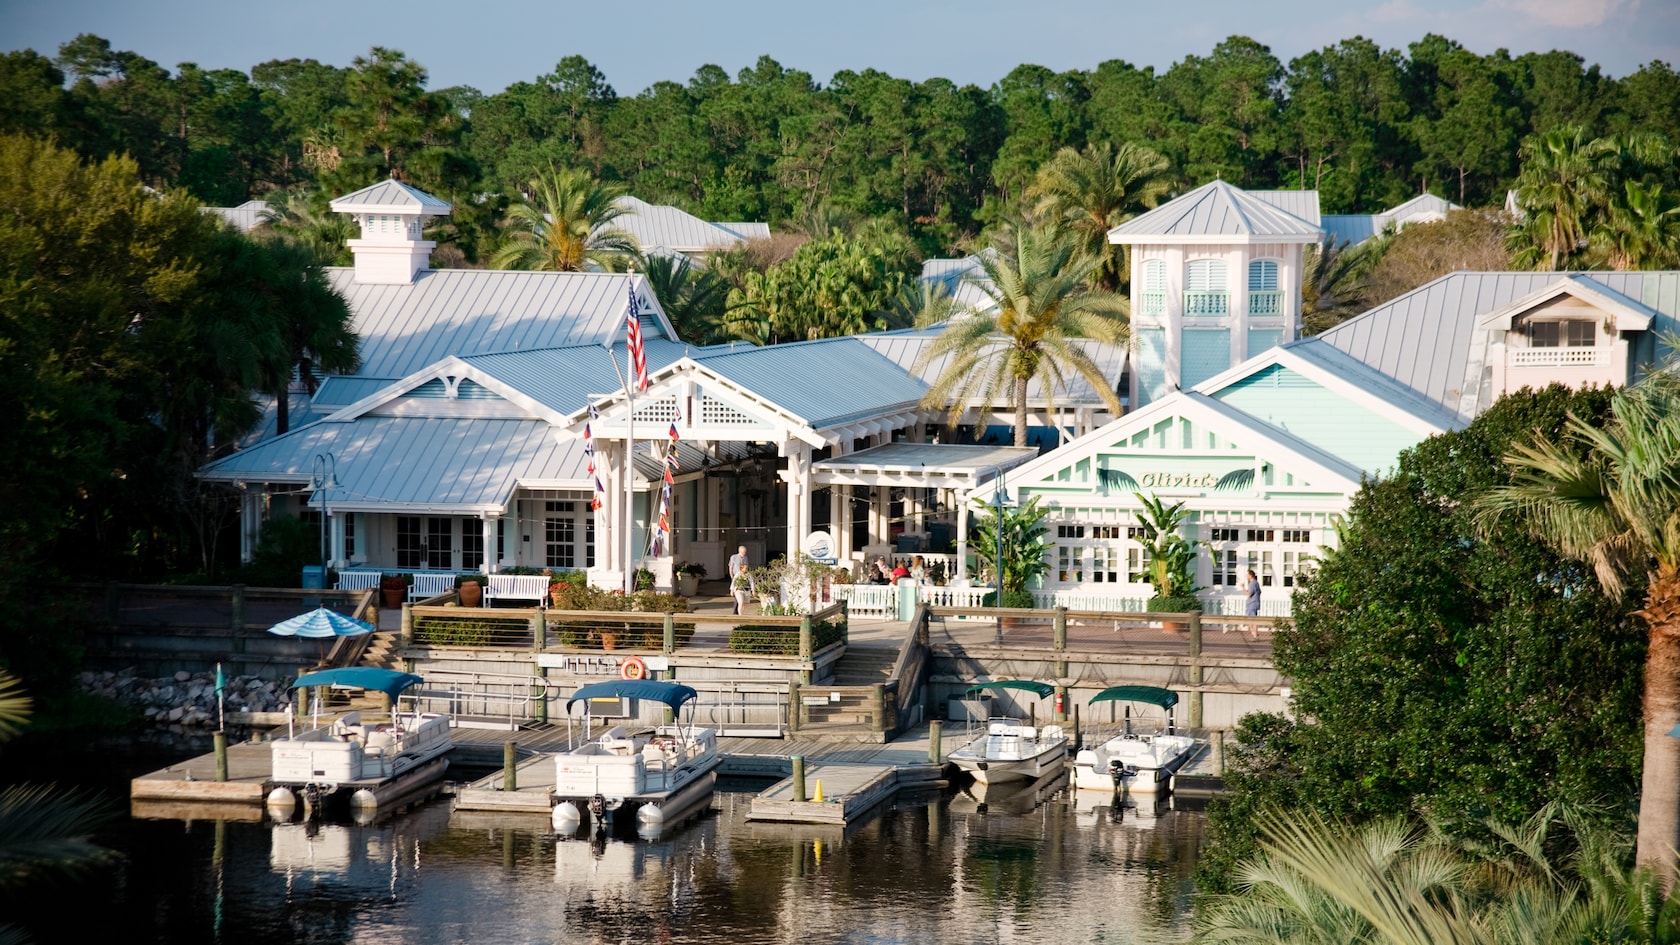 Disney's Old Key West Resort in Orlando, FL